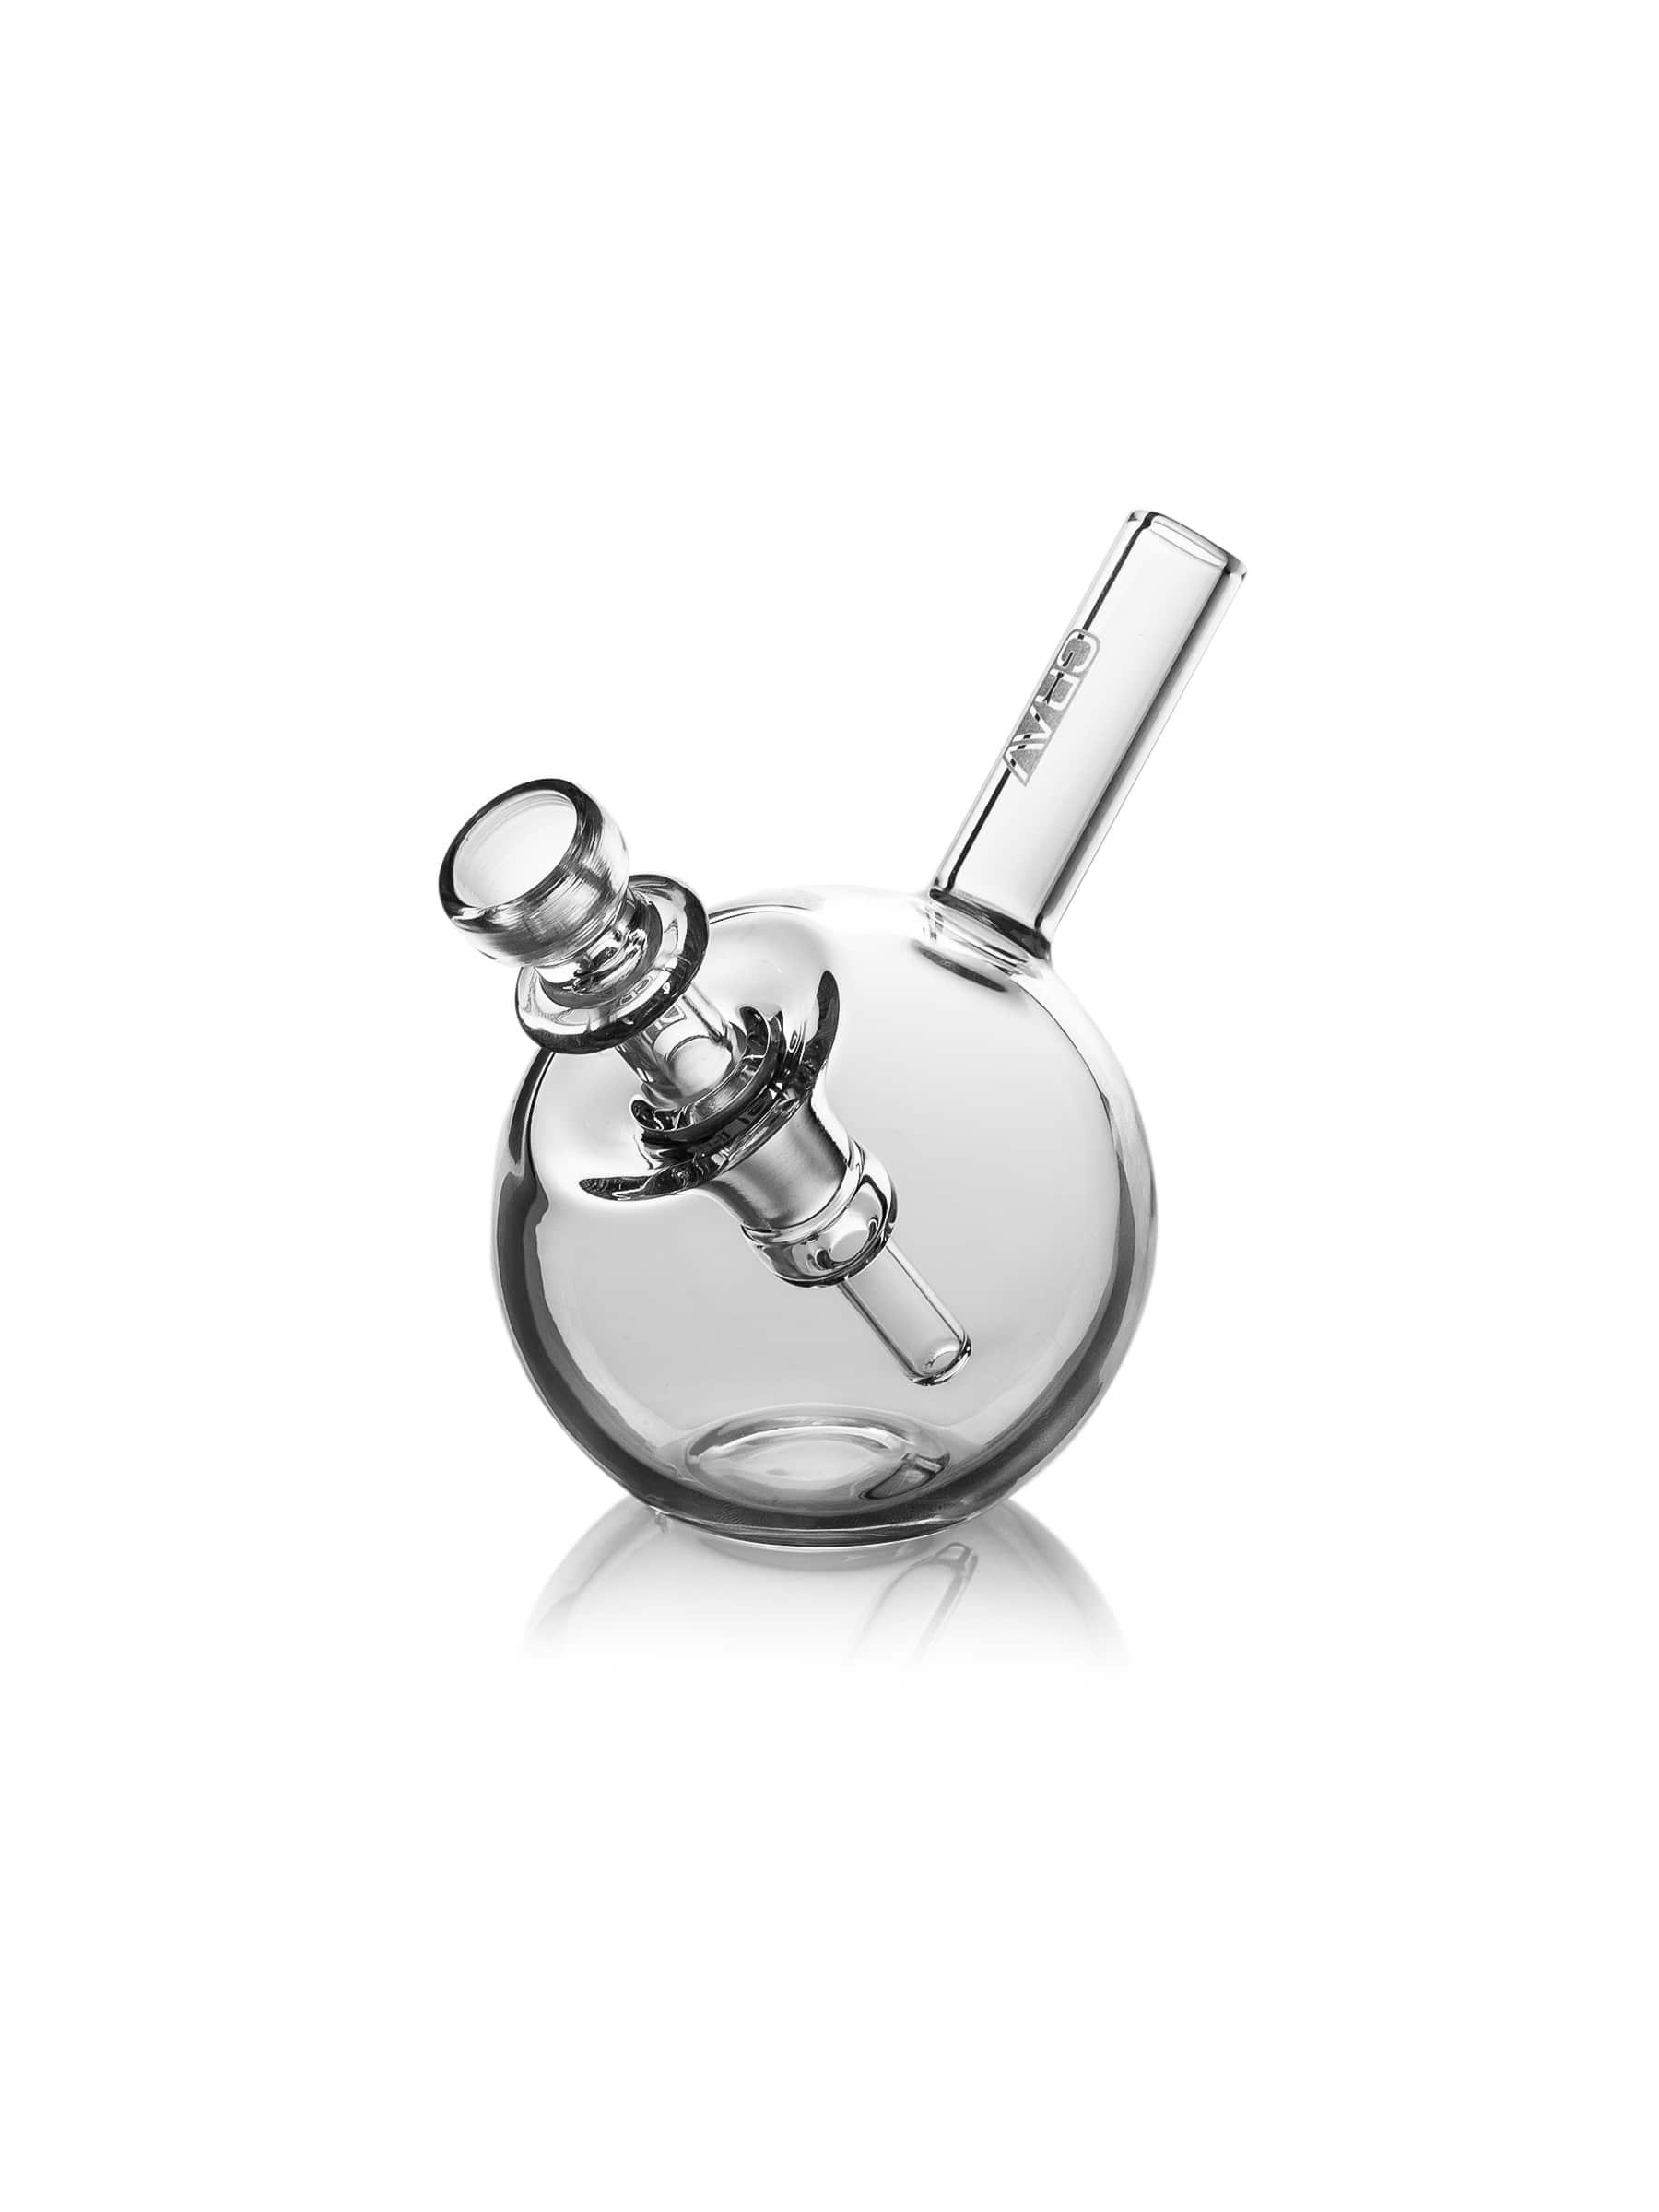 Micro Pocket Bubbler — Smokin Js